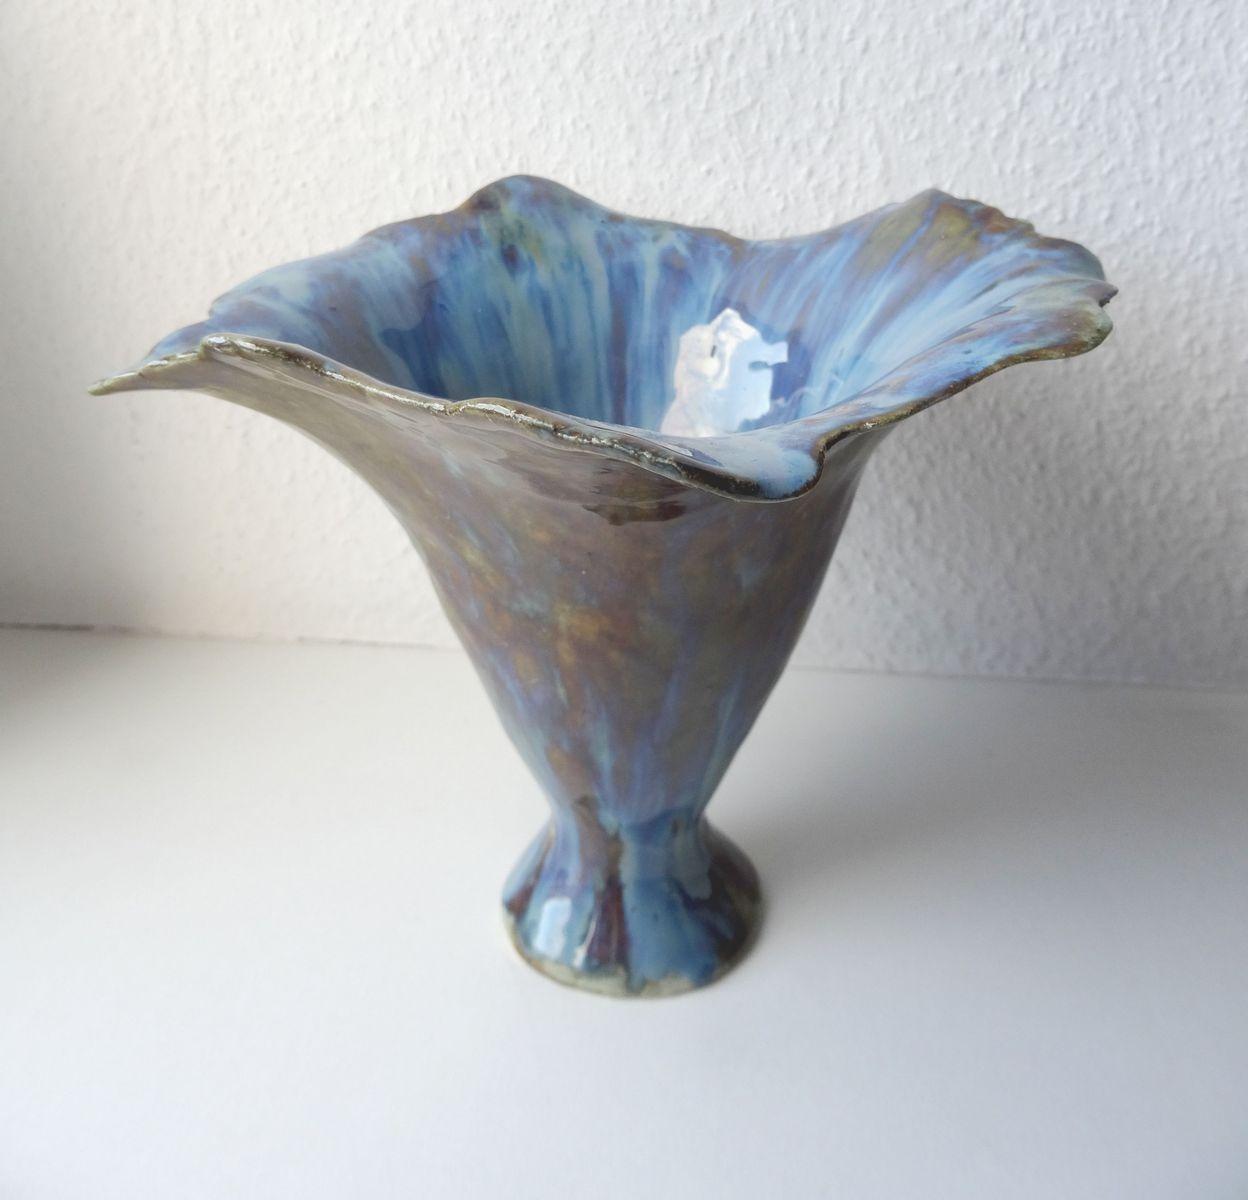 Vase blue flower. 2017. Stone mass, h 17, 5 cm, diam. 21.5 cm